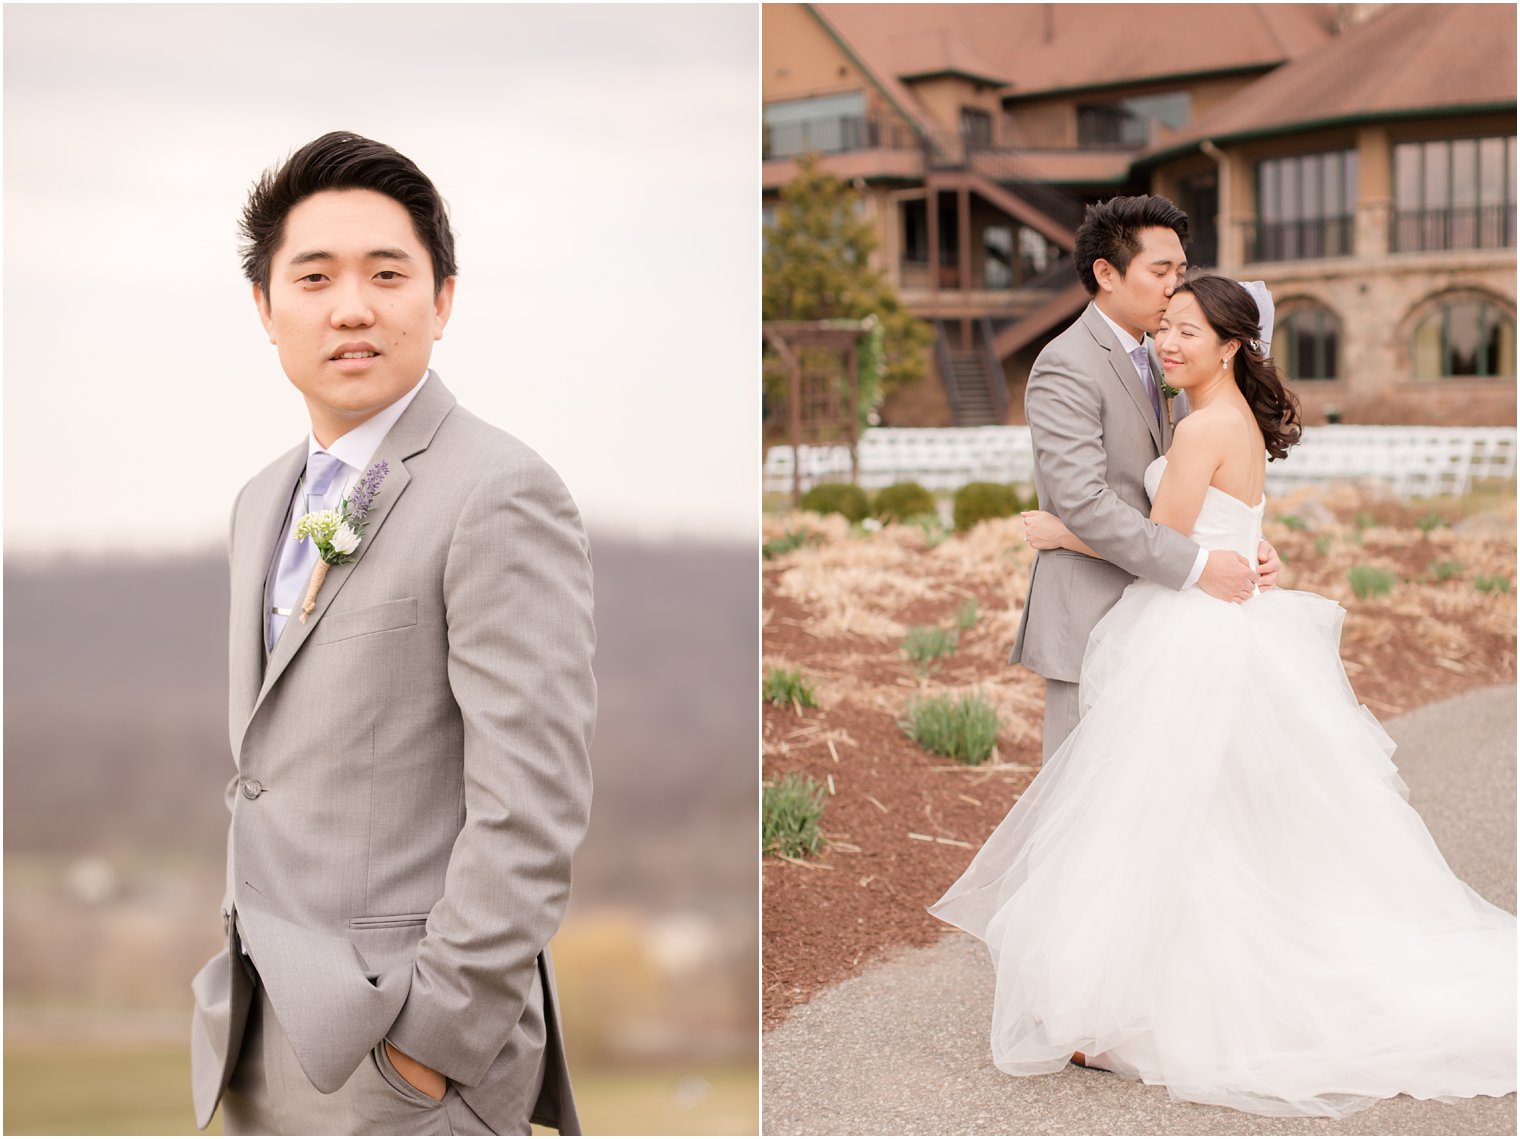 Timeless wedding photos at Crystal Springs Resort